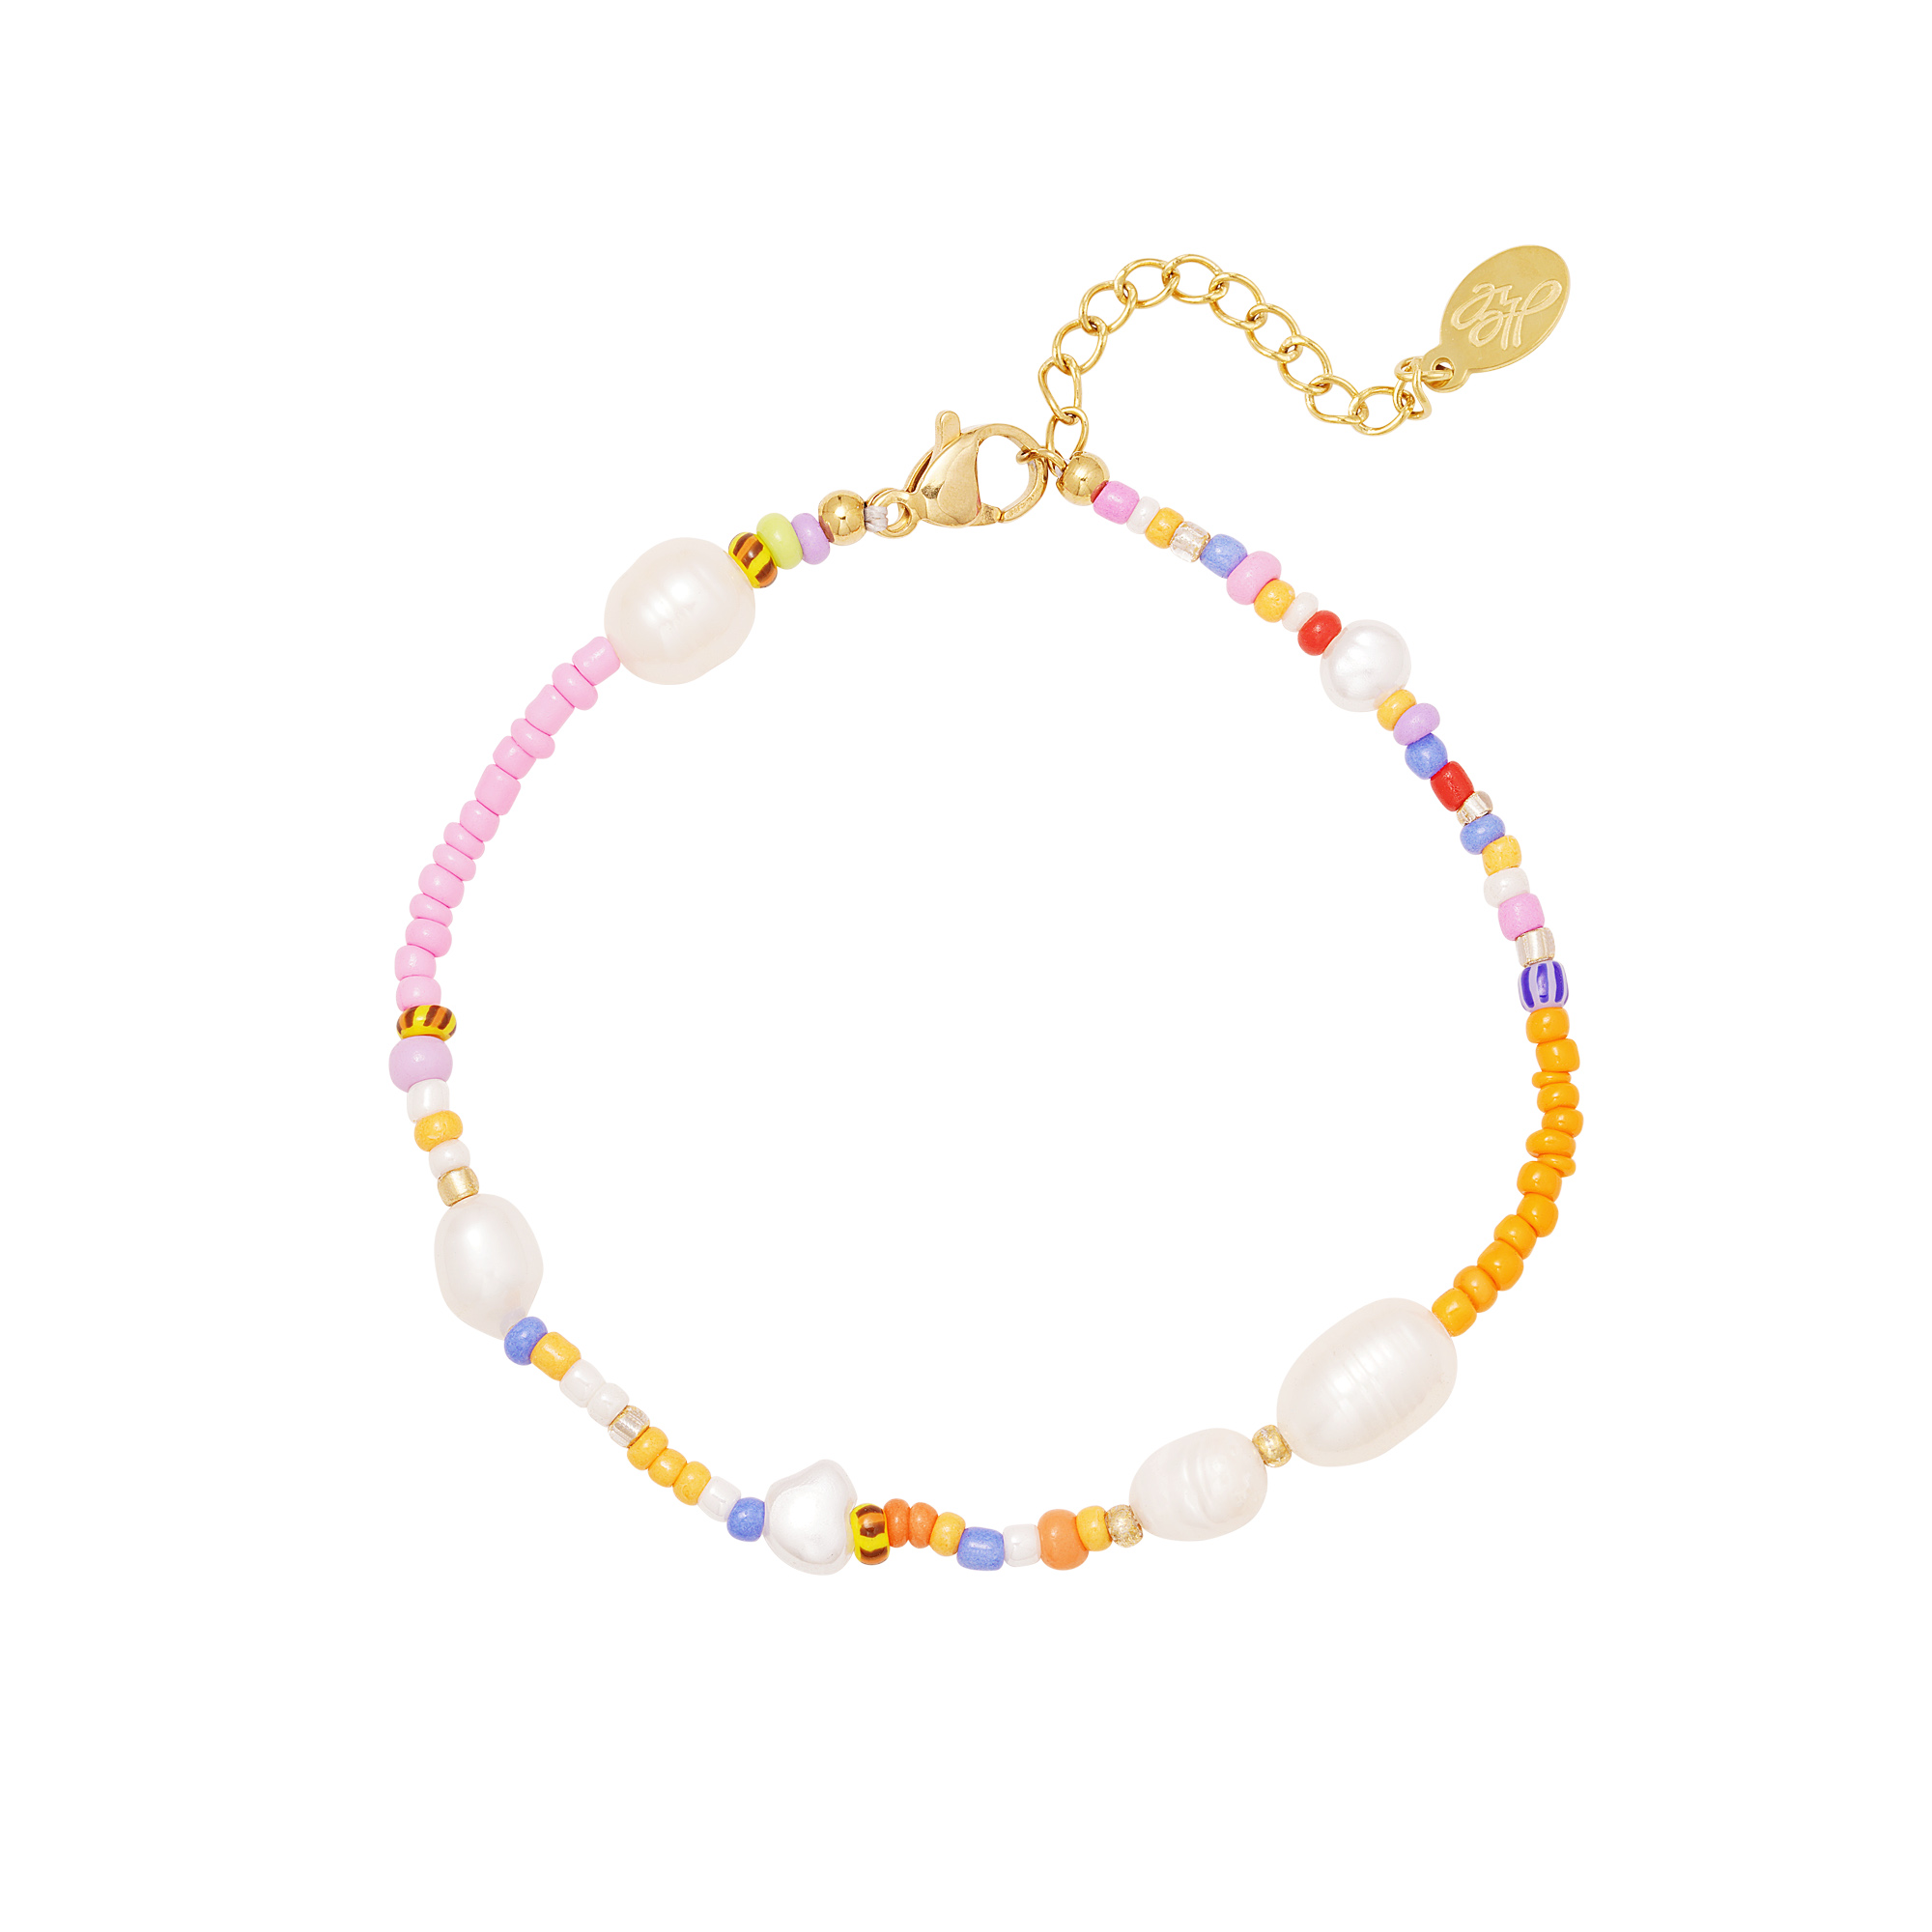 Colourful beads bracelet